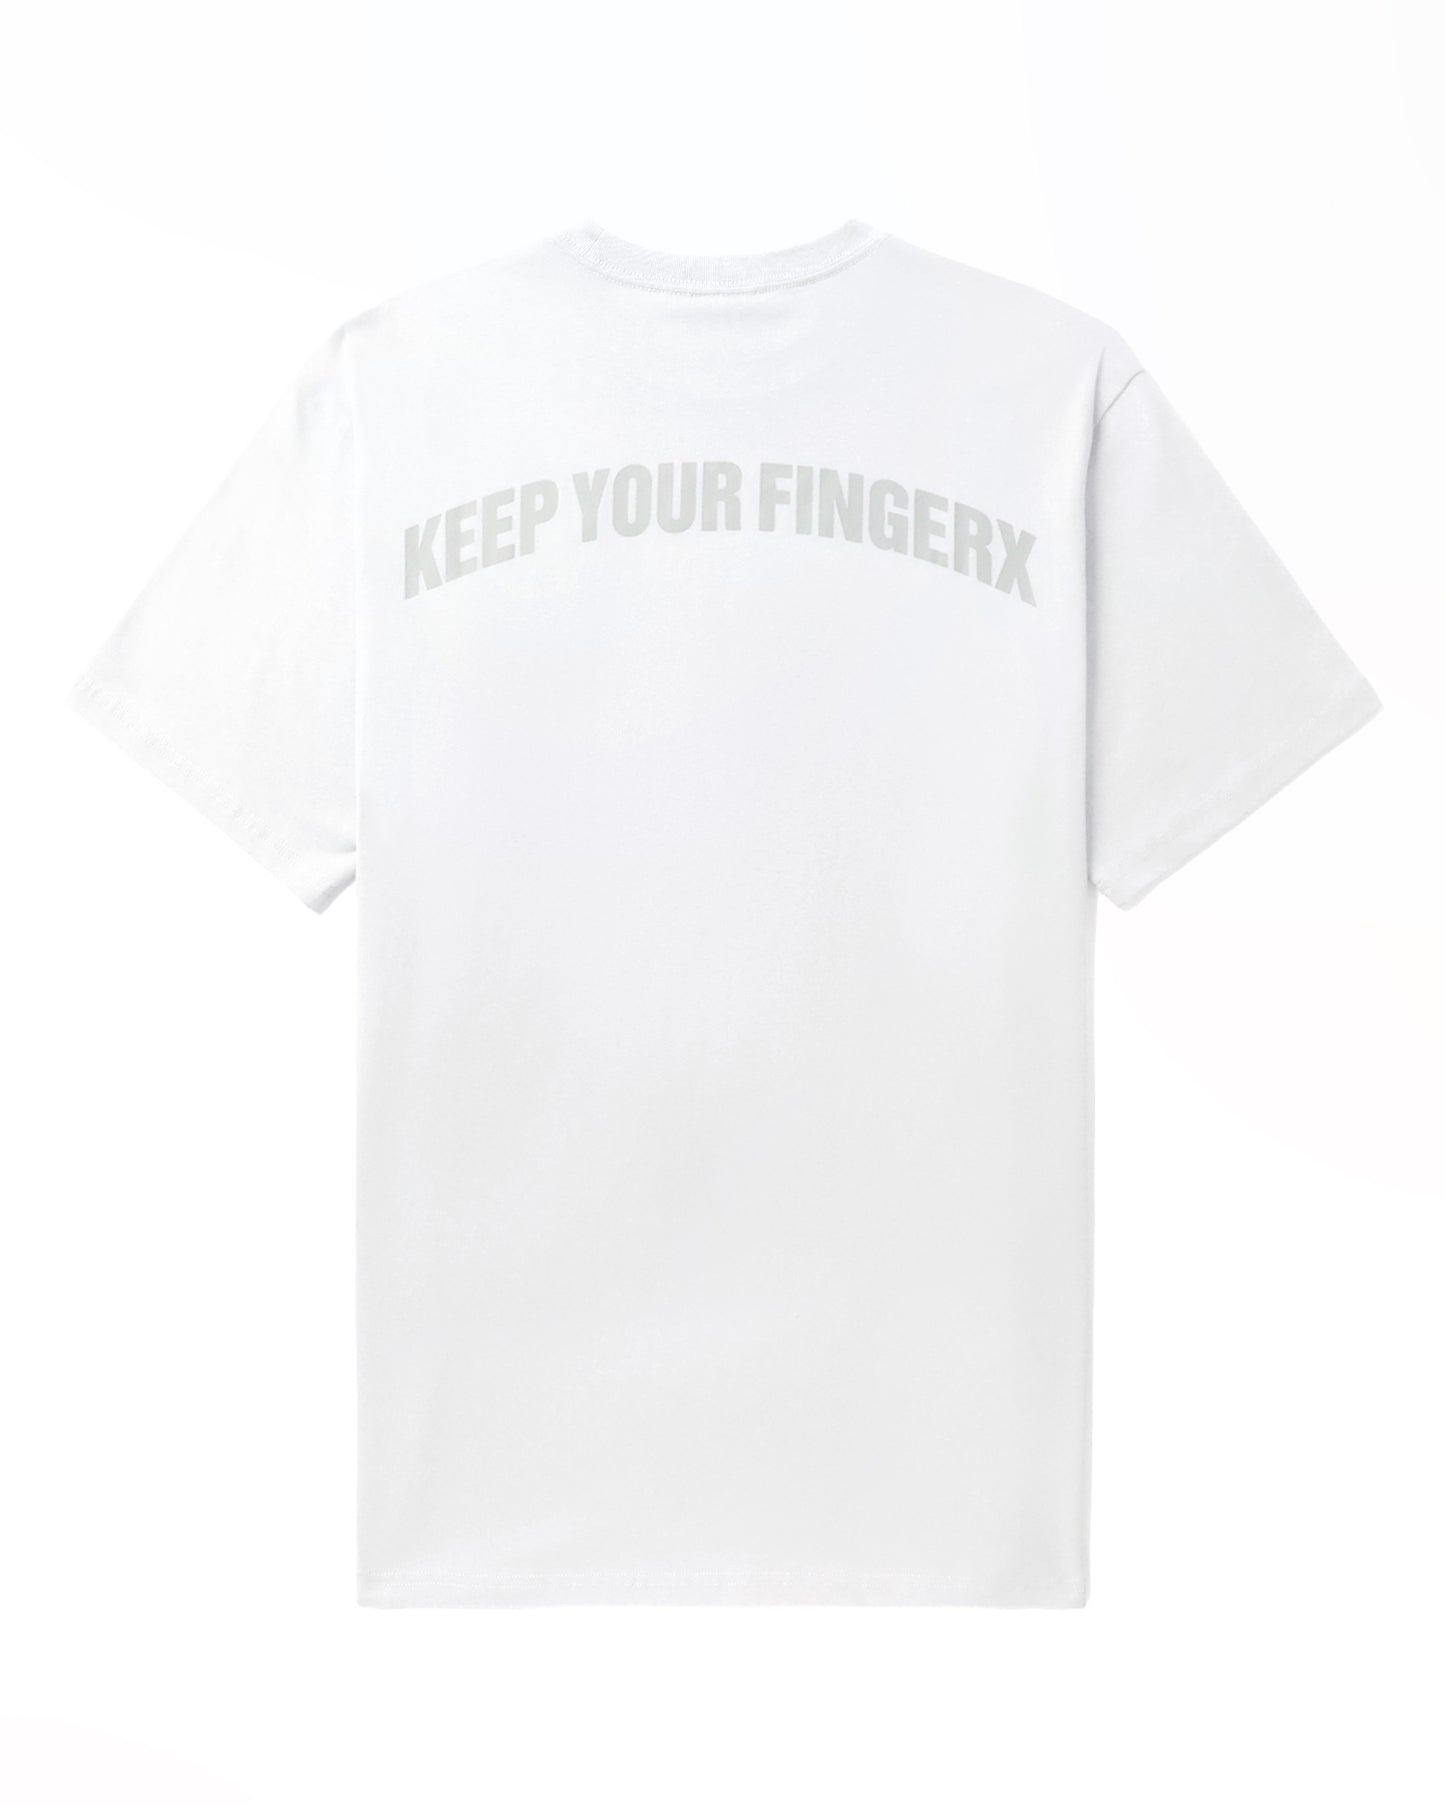 Men's - Keep Your Fingerx White T-shirt